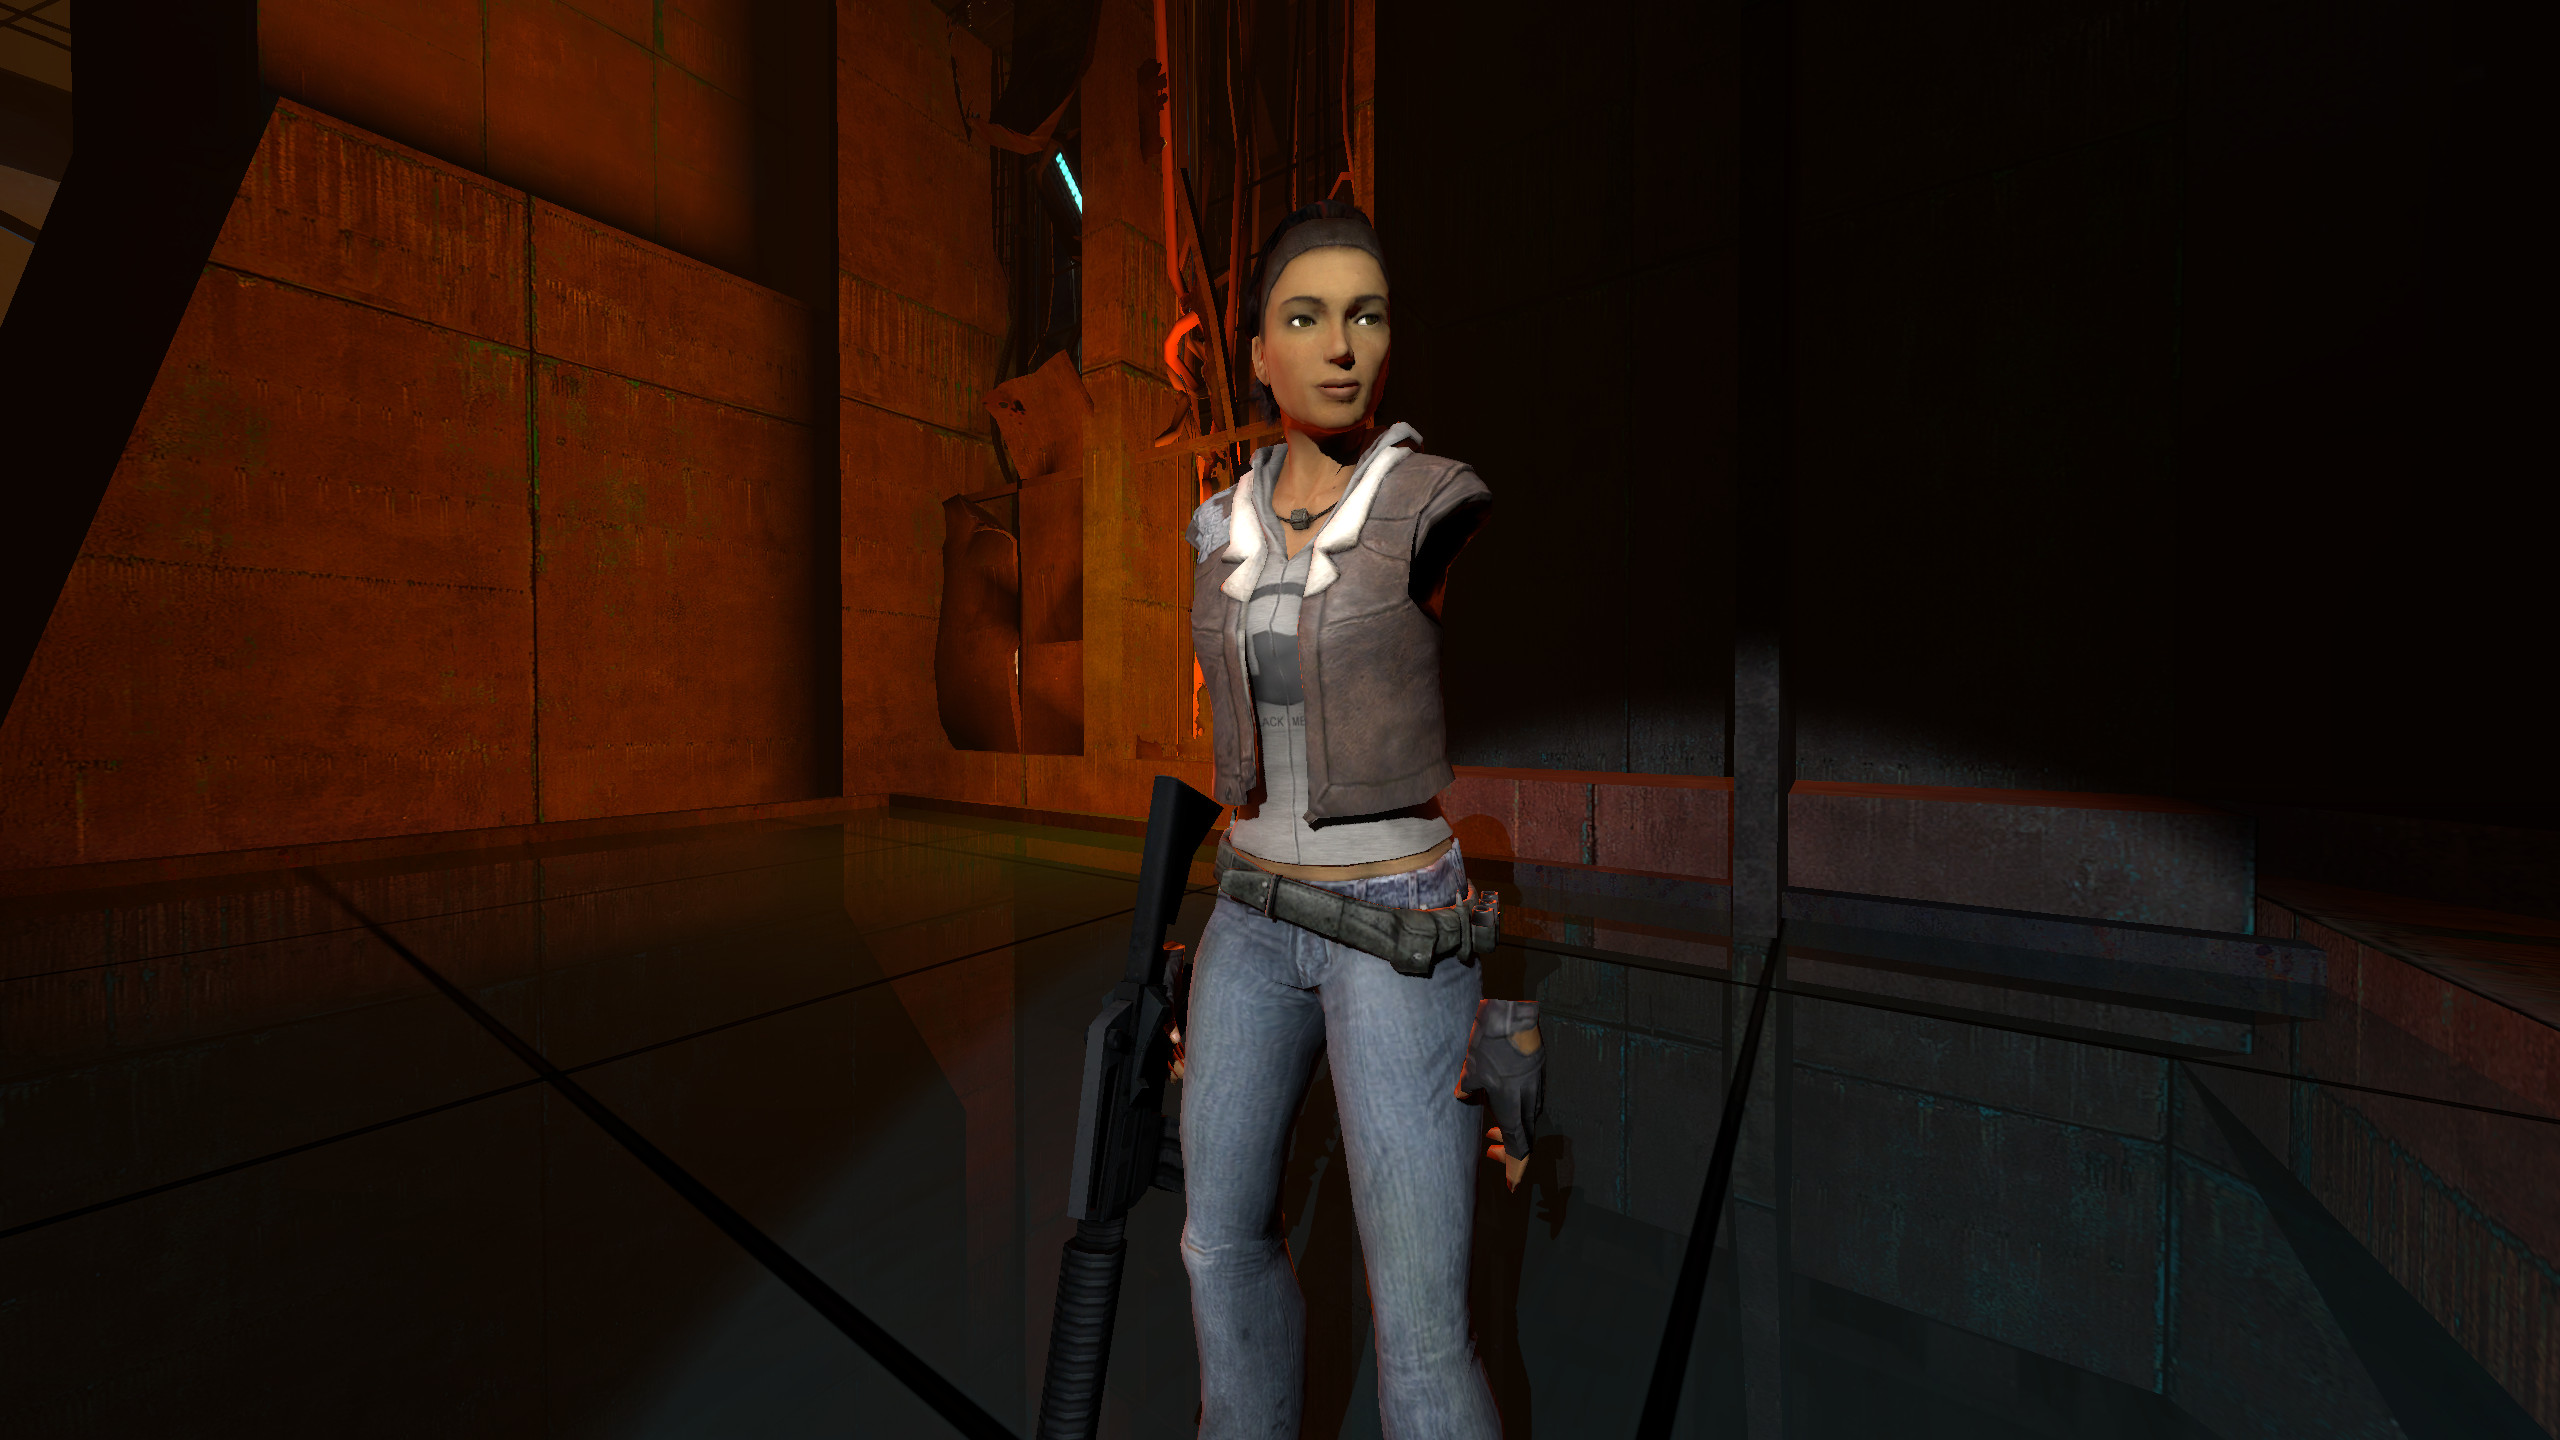 Alyx Vance Replacement [Half-Life 2] [Requests]